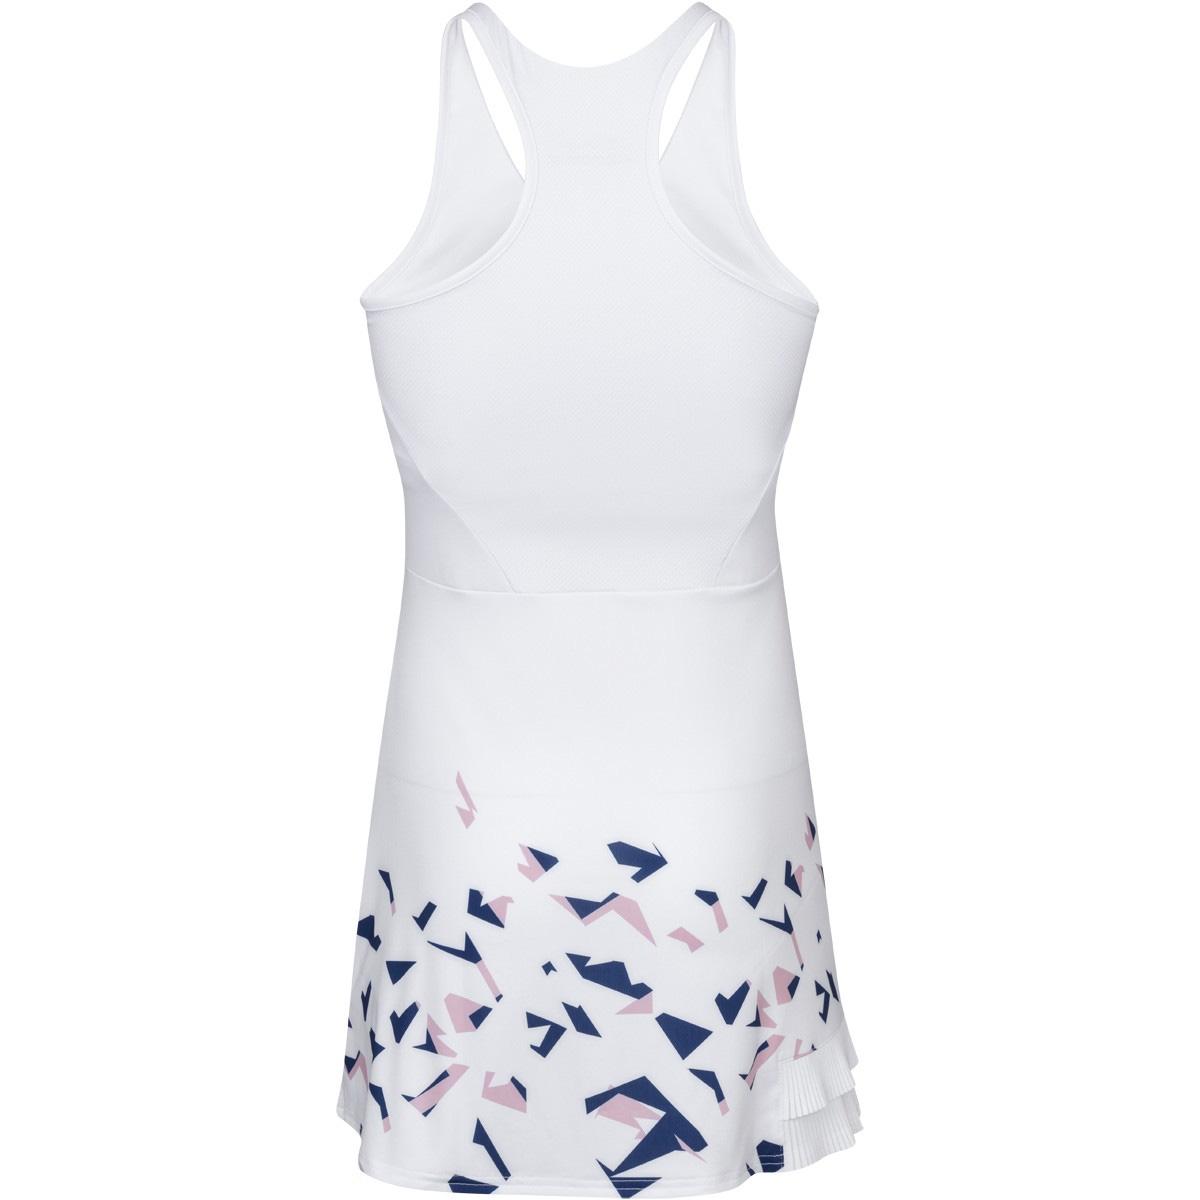 Babolat Girls Compete Tennis Dress - White/Estate Blue - Tennisnuts.com